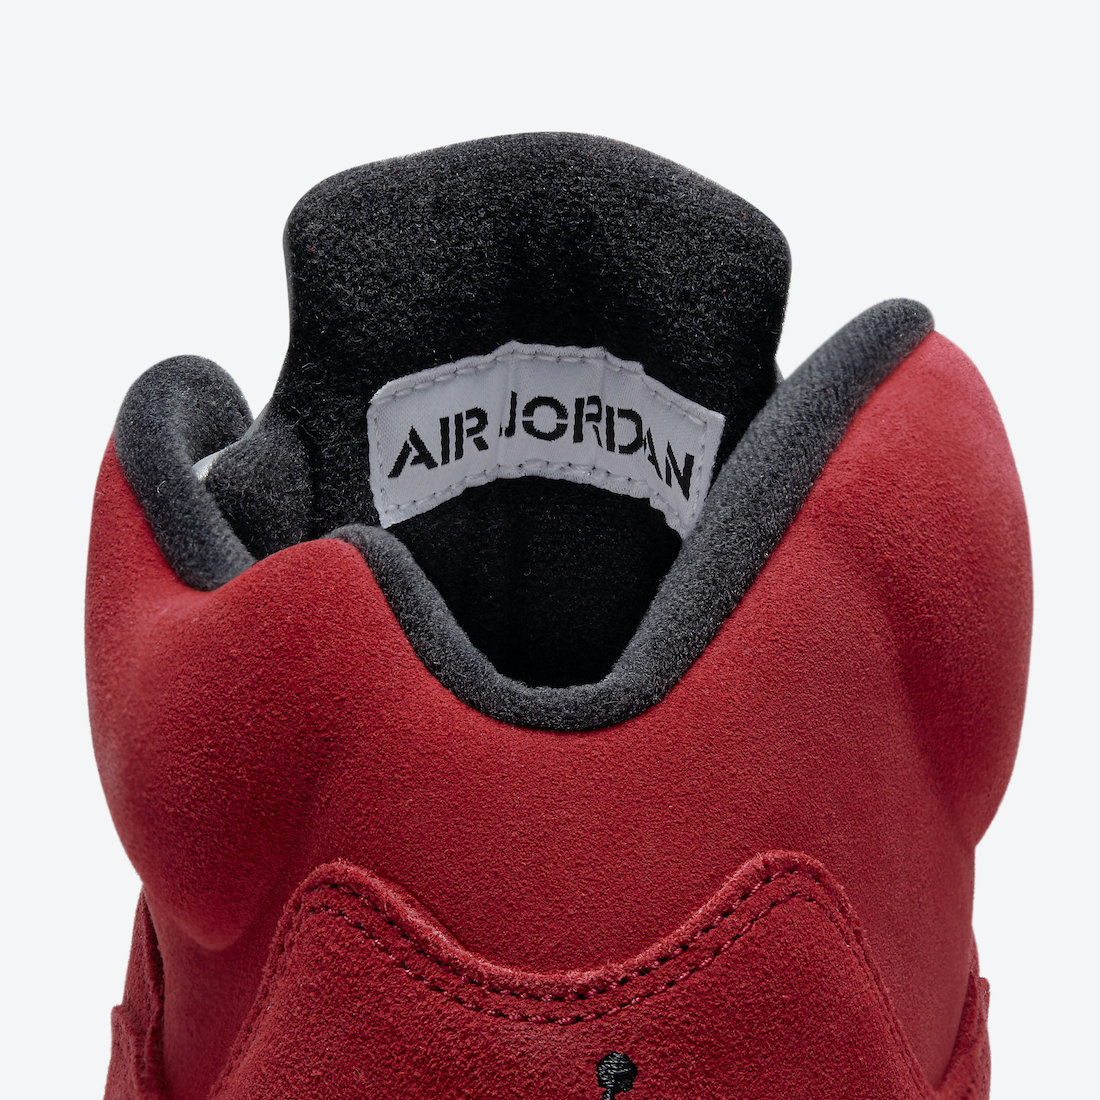 Air Jordan 5 “Raging Bull”